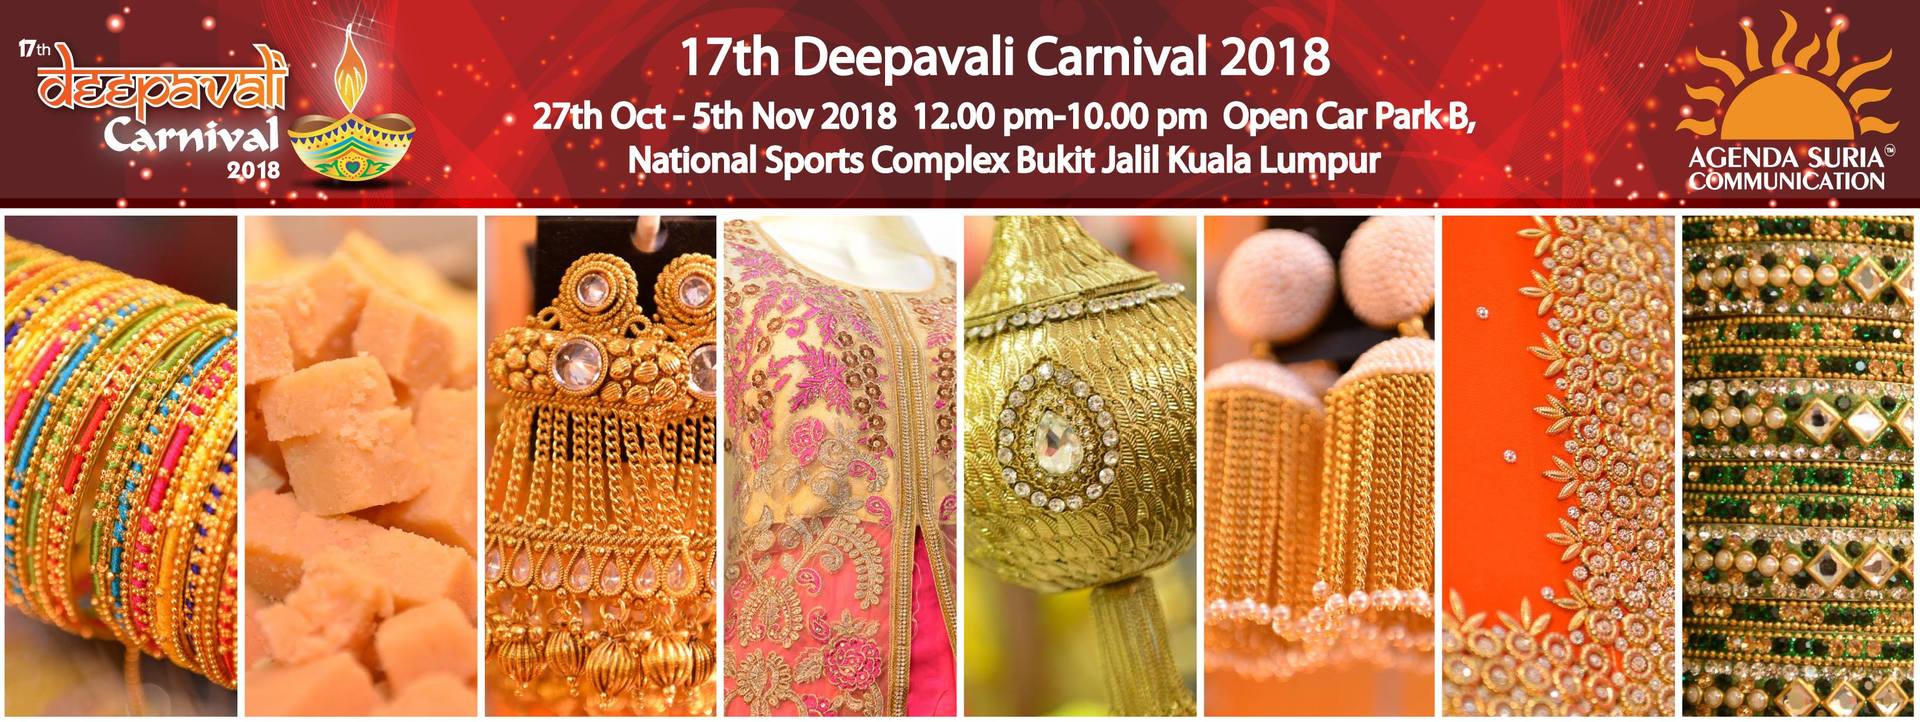 17th Deepavali Carnival 2018 Featured Image